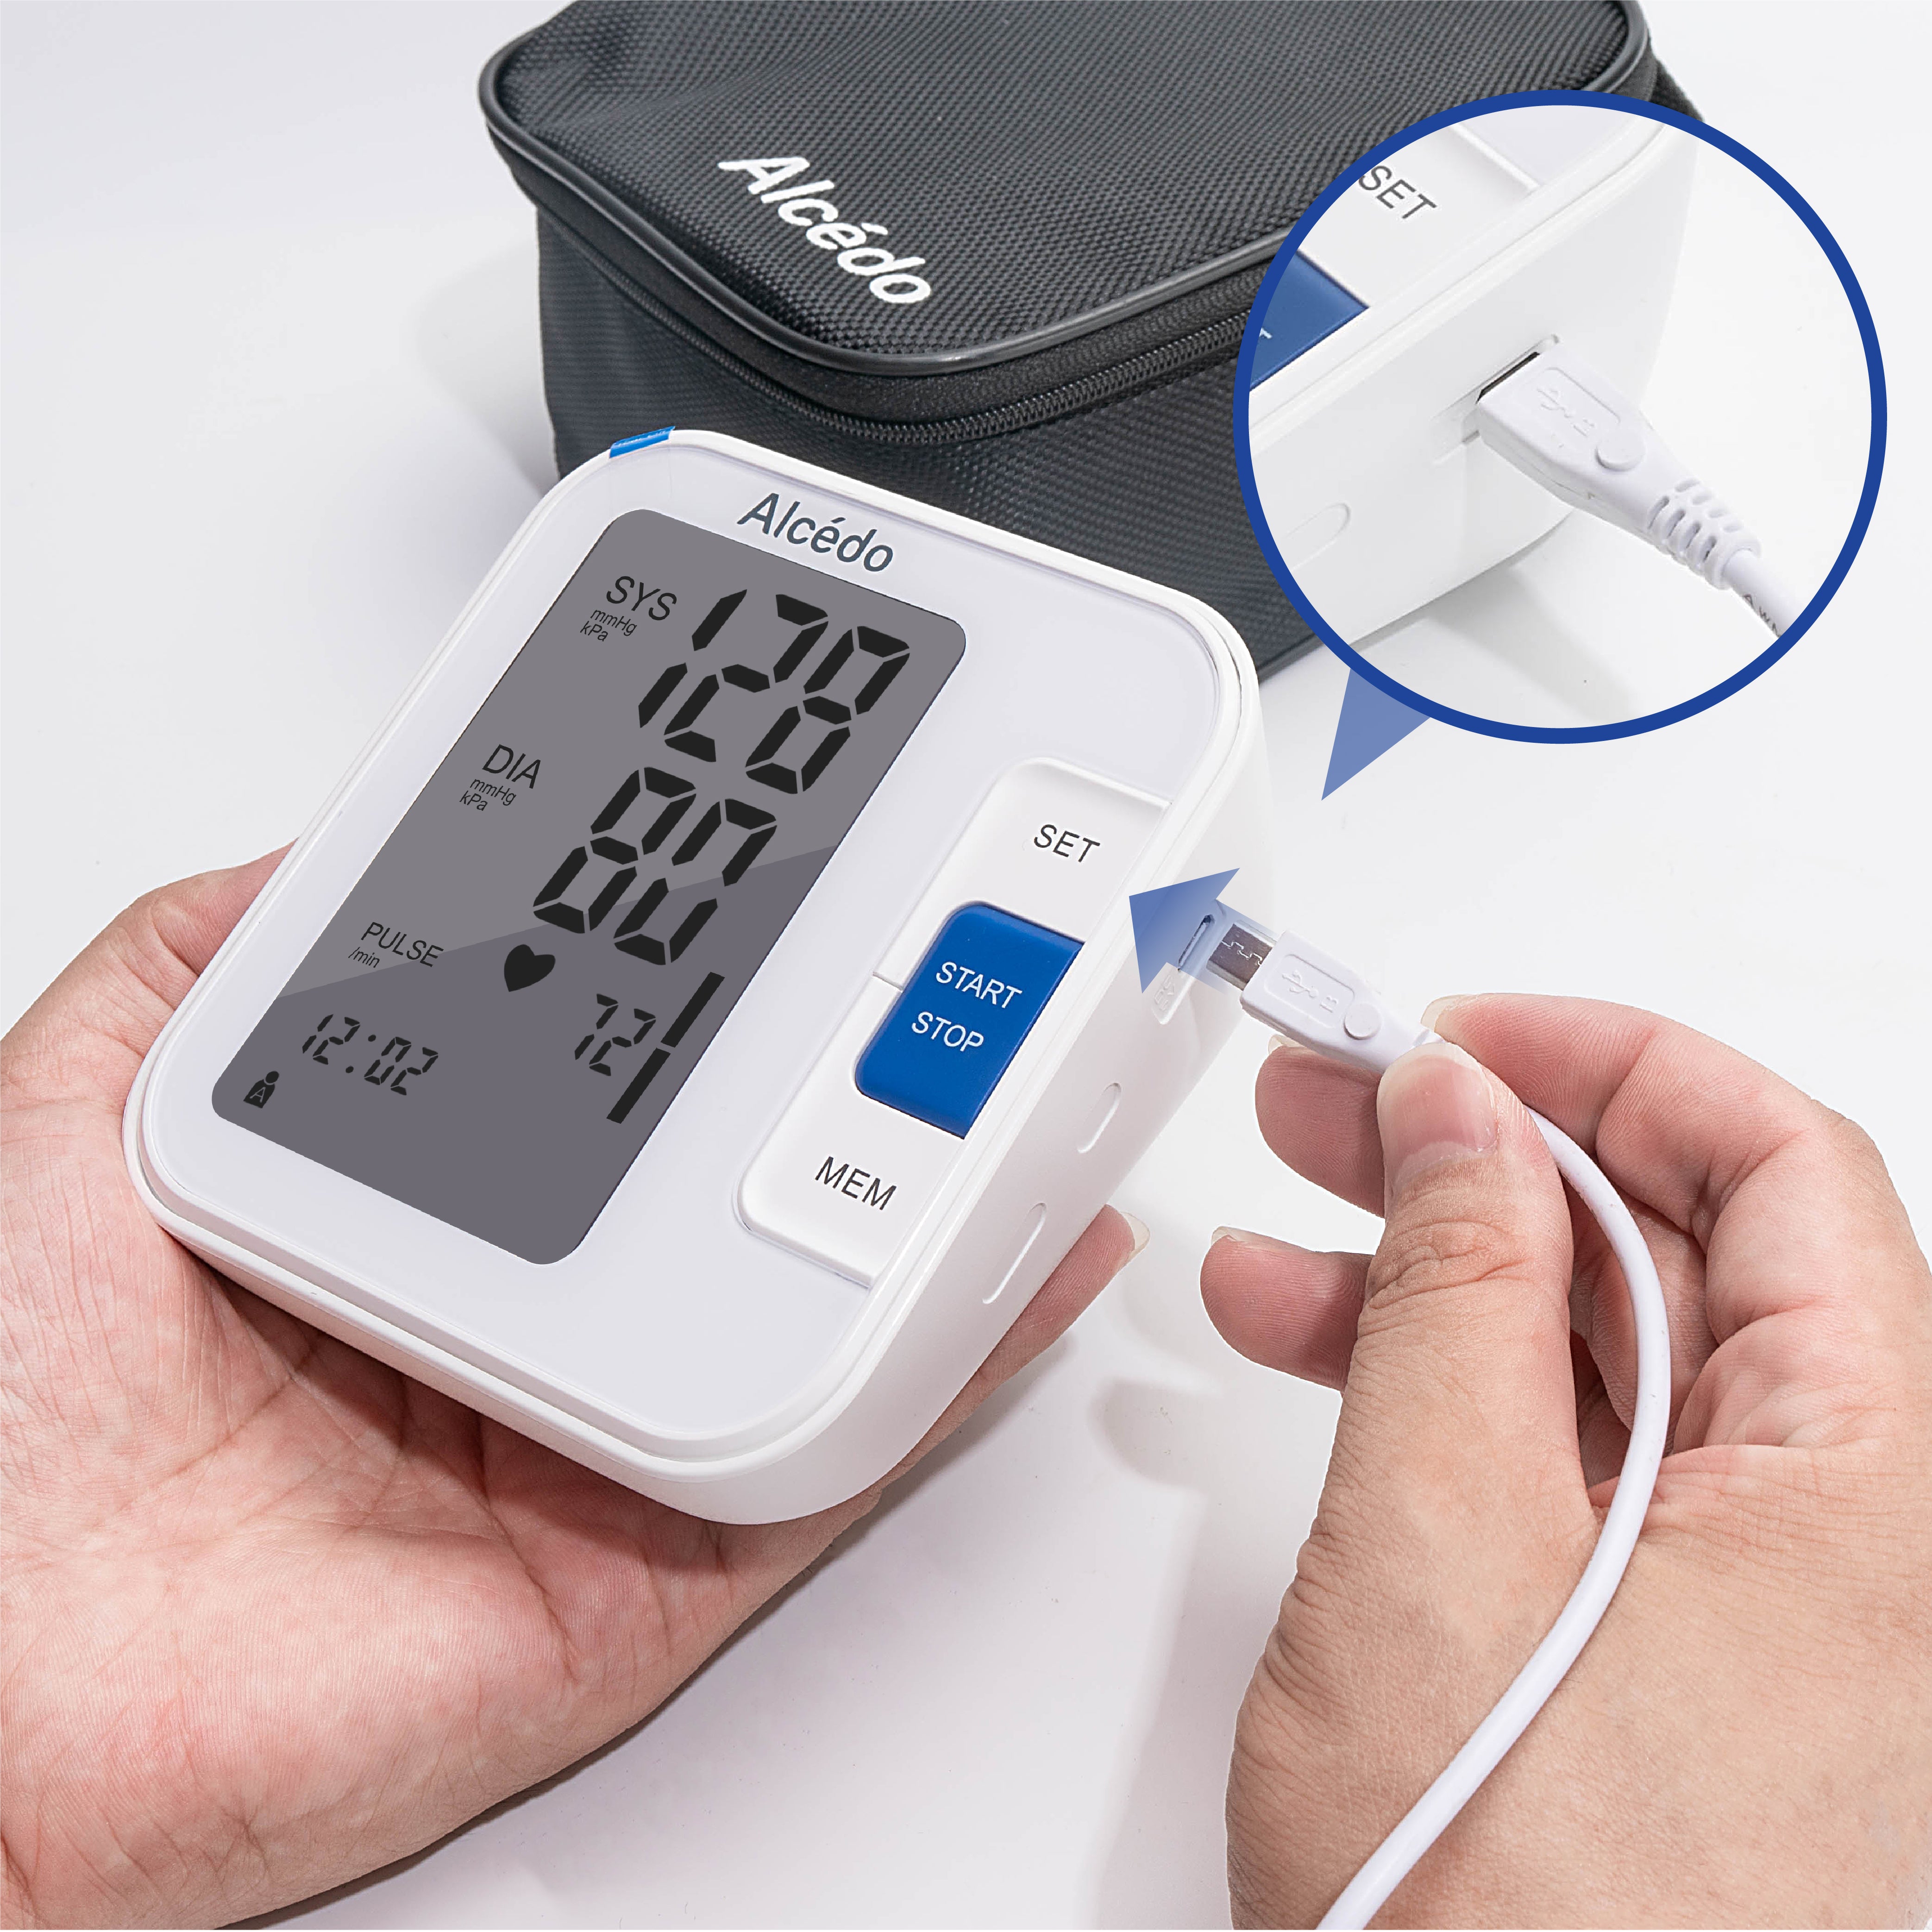 Alcedo Blood Pressure Monitor B21 – Alcedo Health